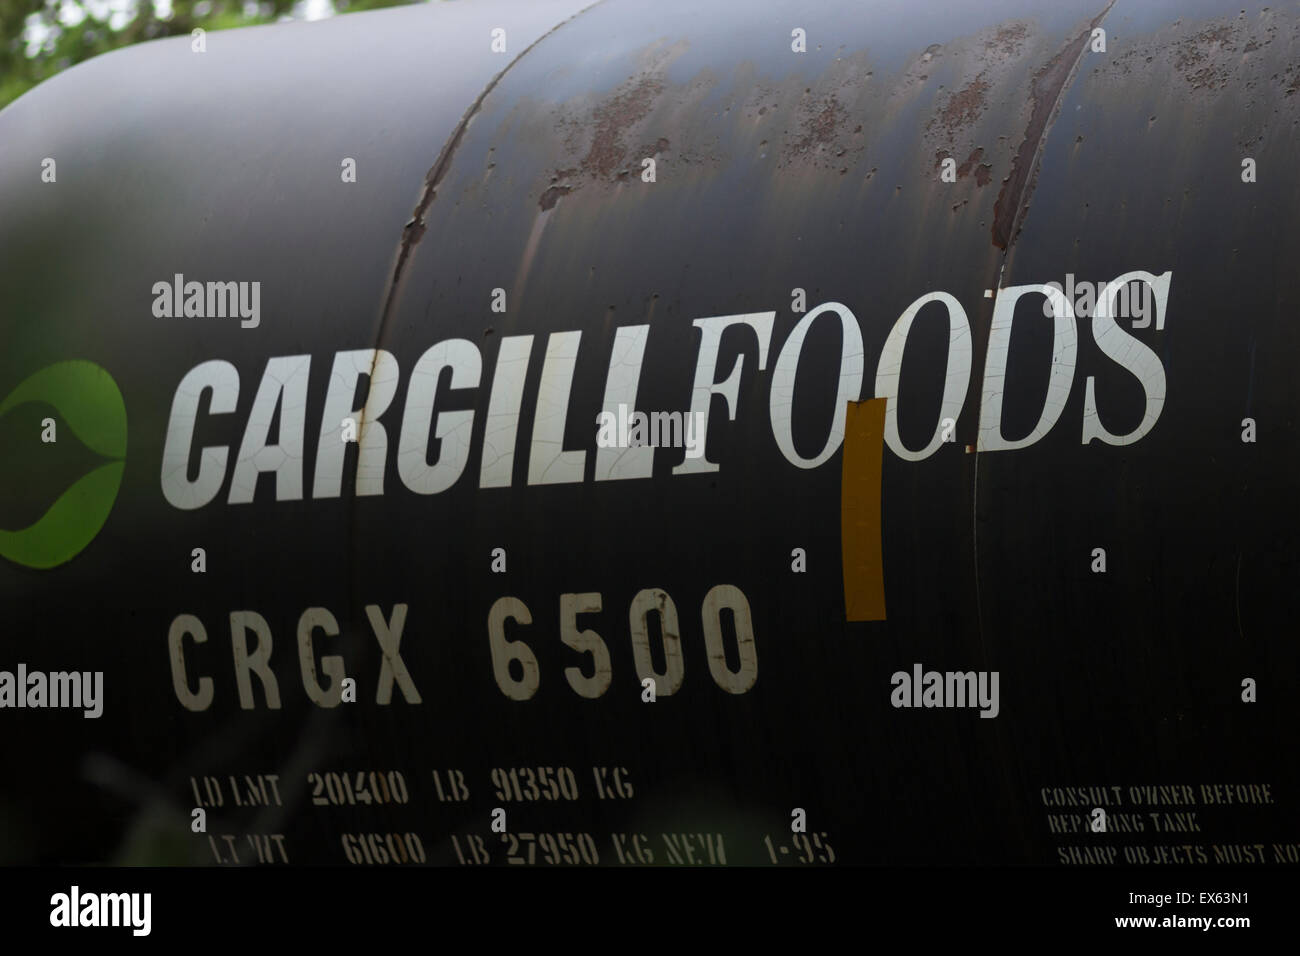 A Cargill foods railroad tanker car. Stock Photo